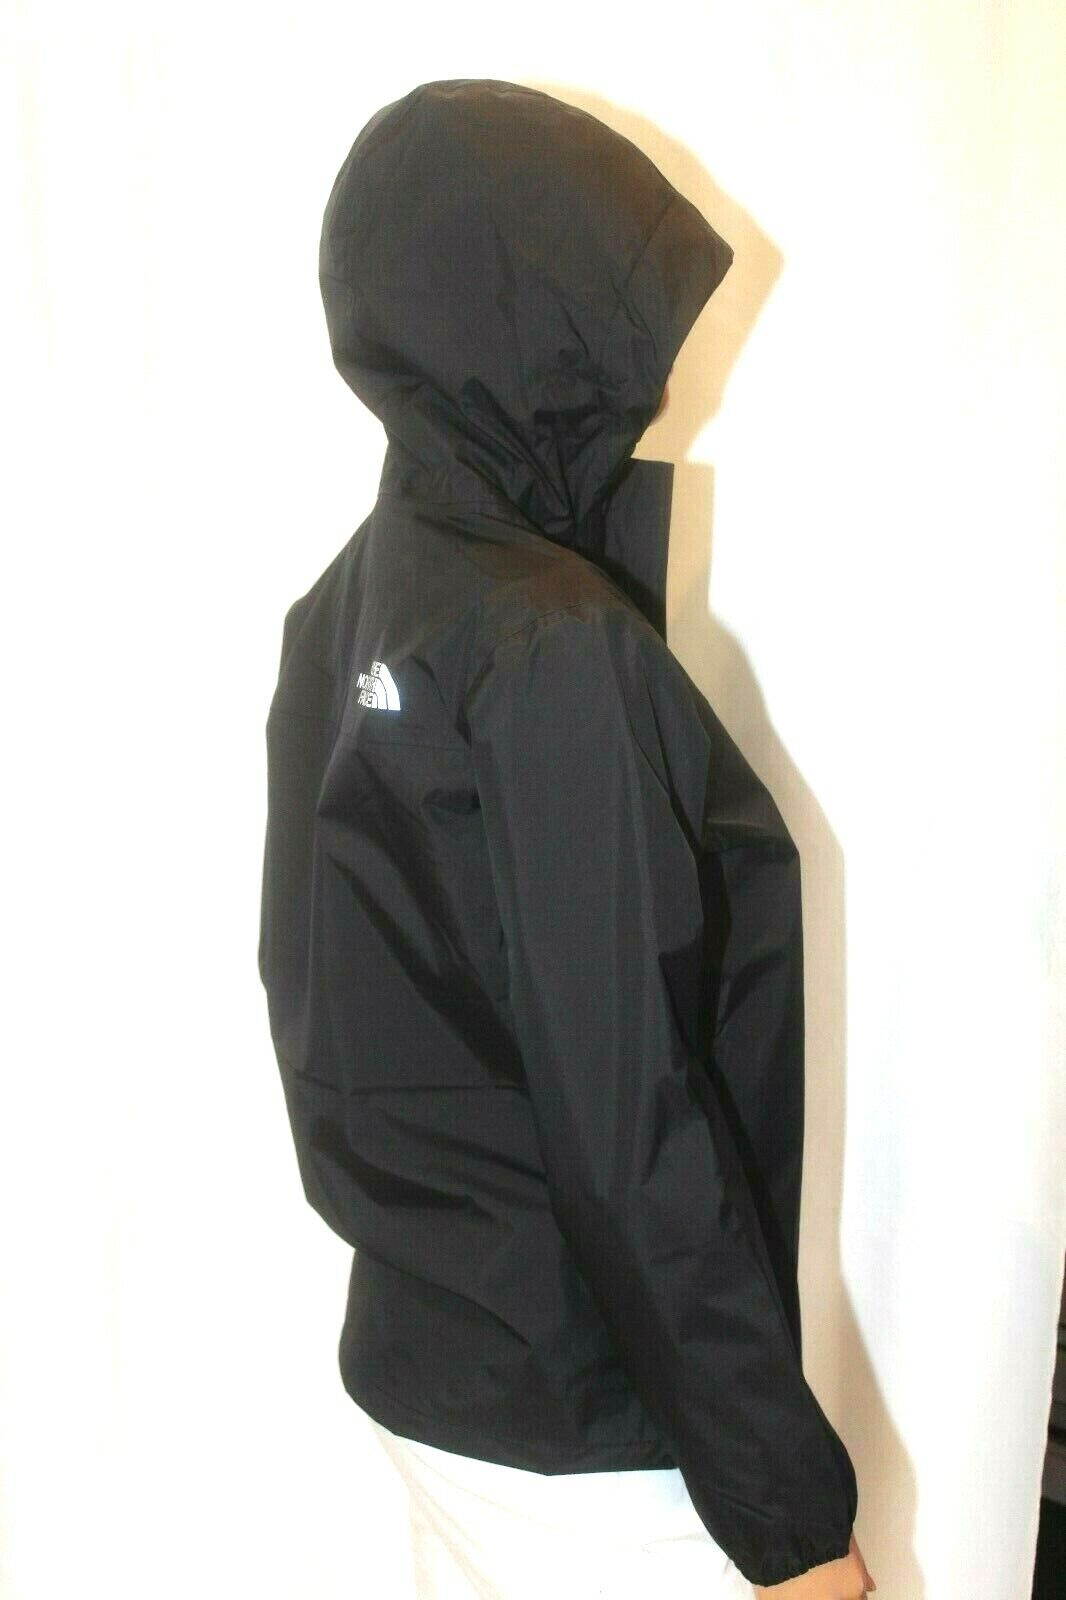 *NWT* $70. North Face Resolve Reflective Girls Black Rain Jacket HyVent Hood =LG